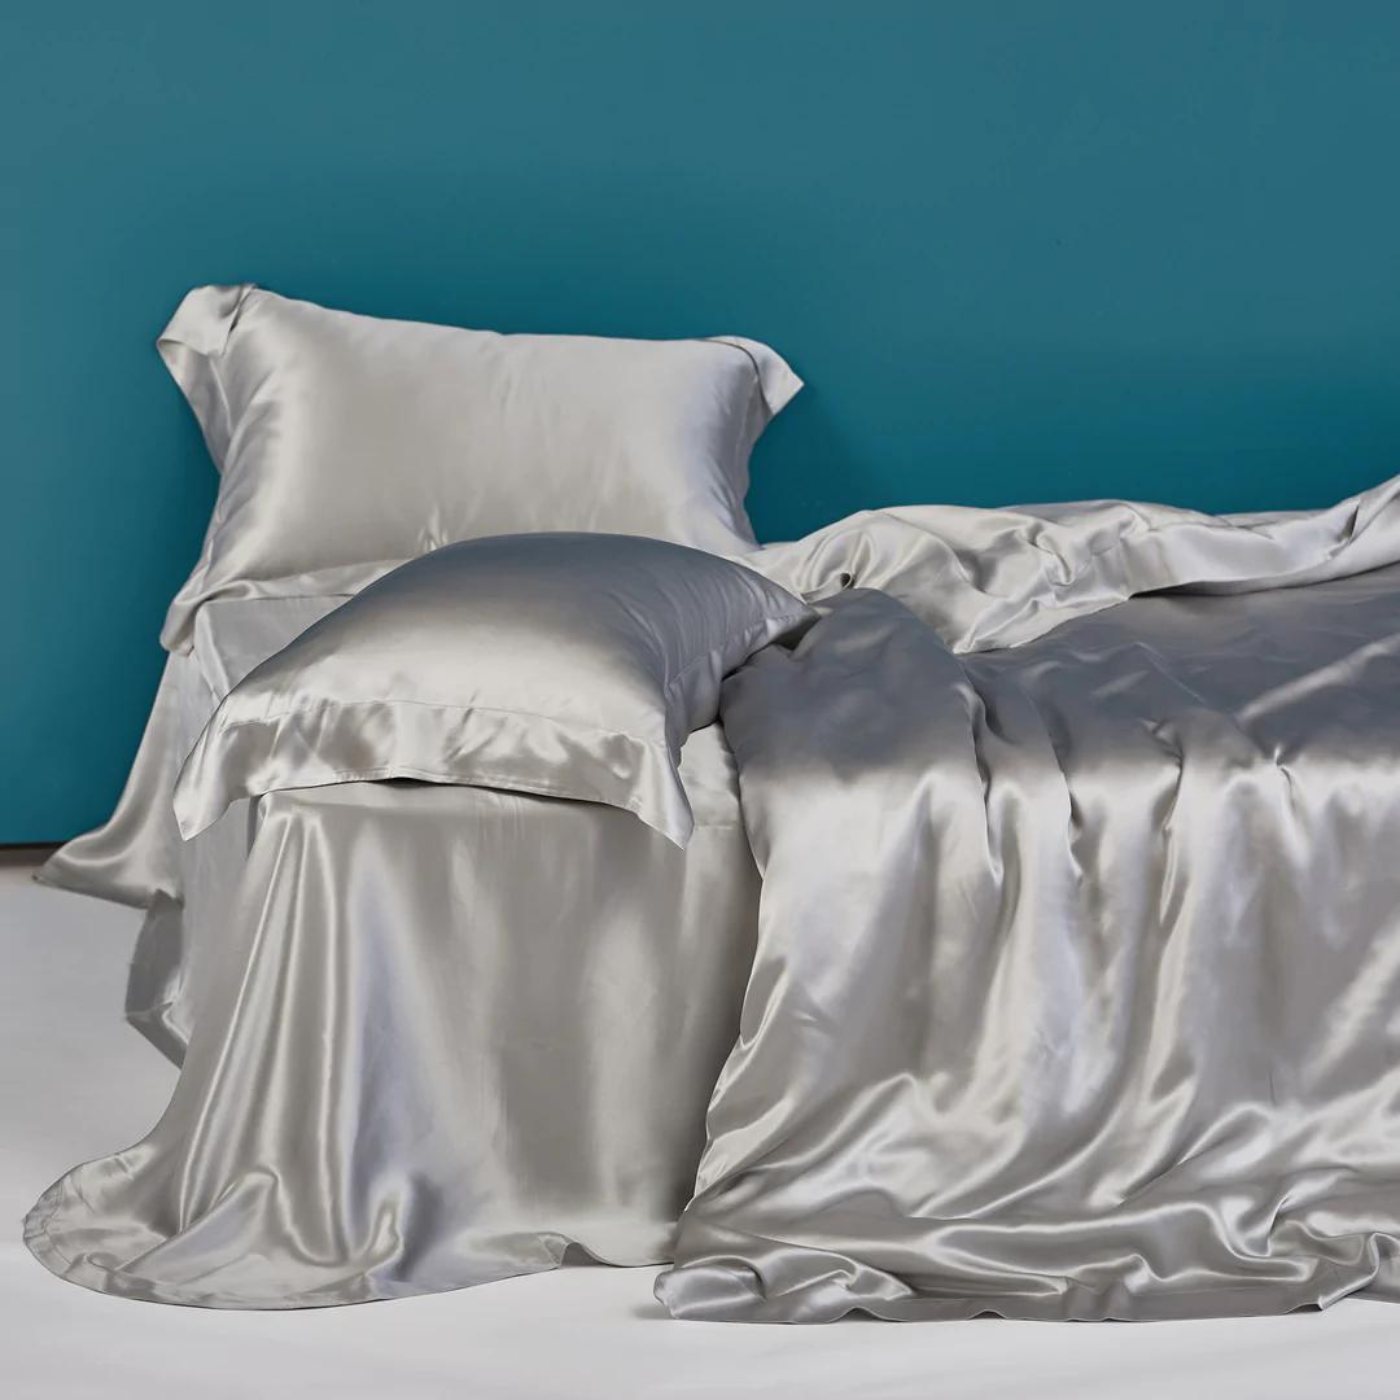 Blue Silk Bed Linen from the Finest Mulberry Silk